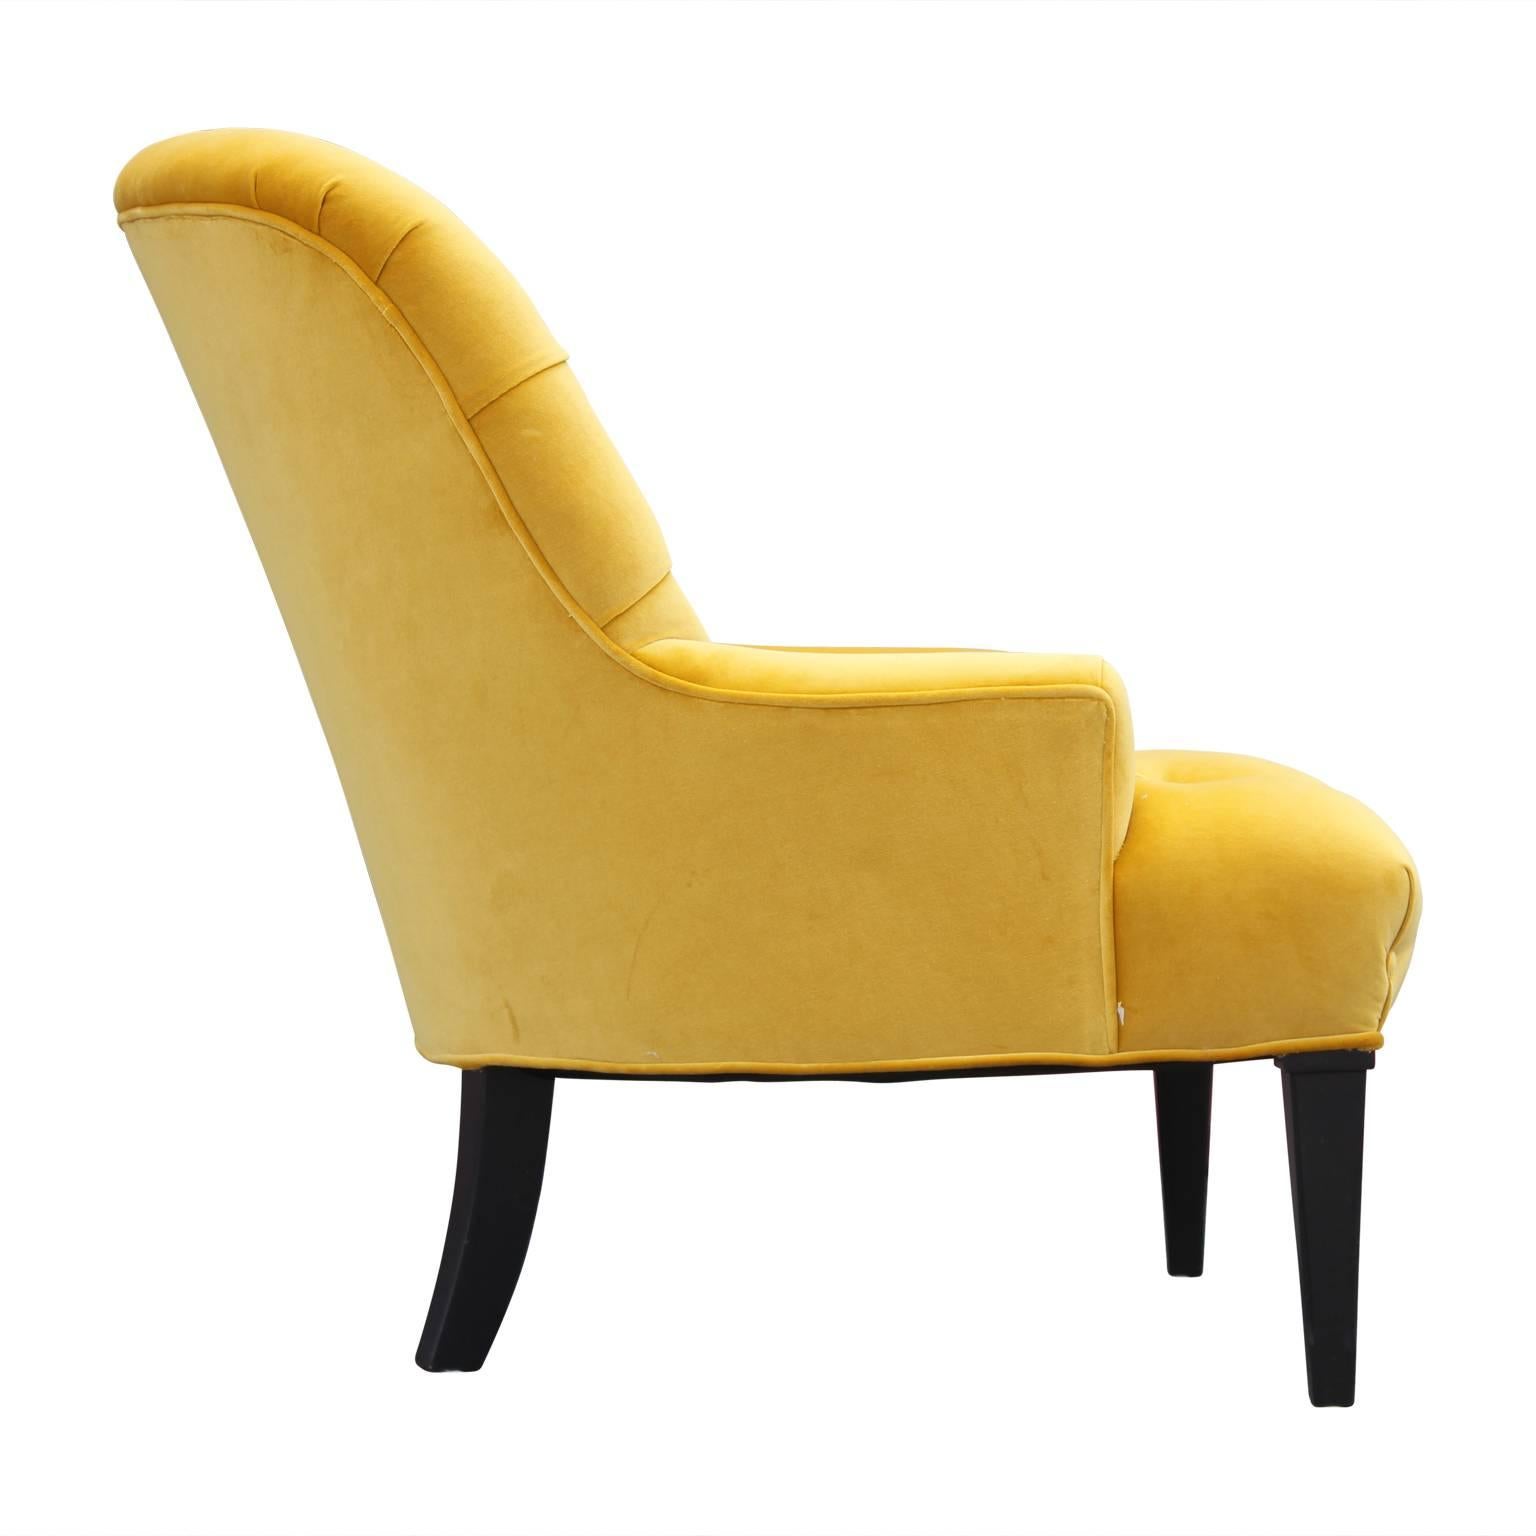 velvet yellow chair